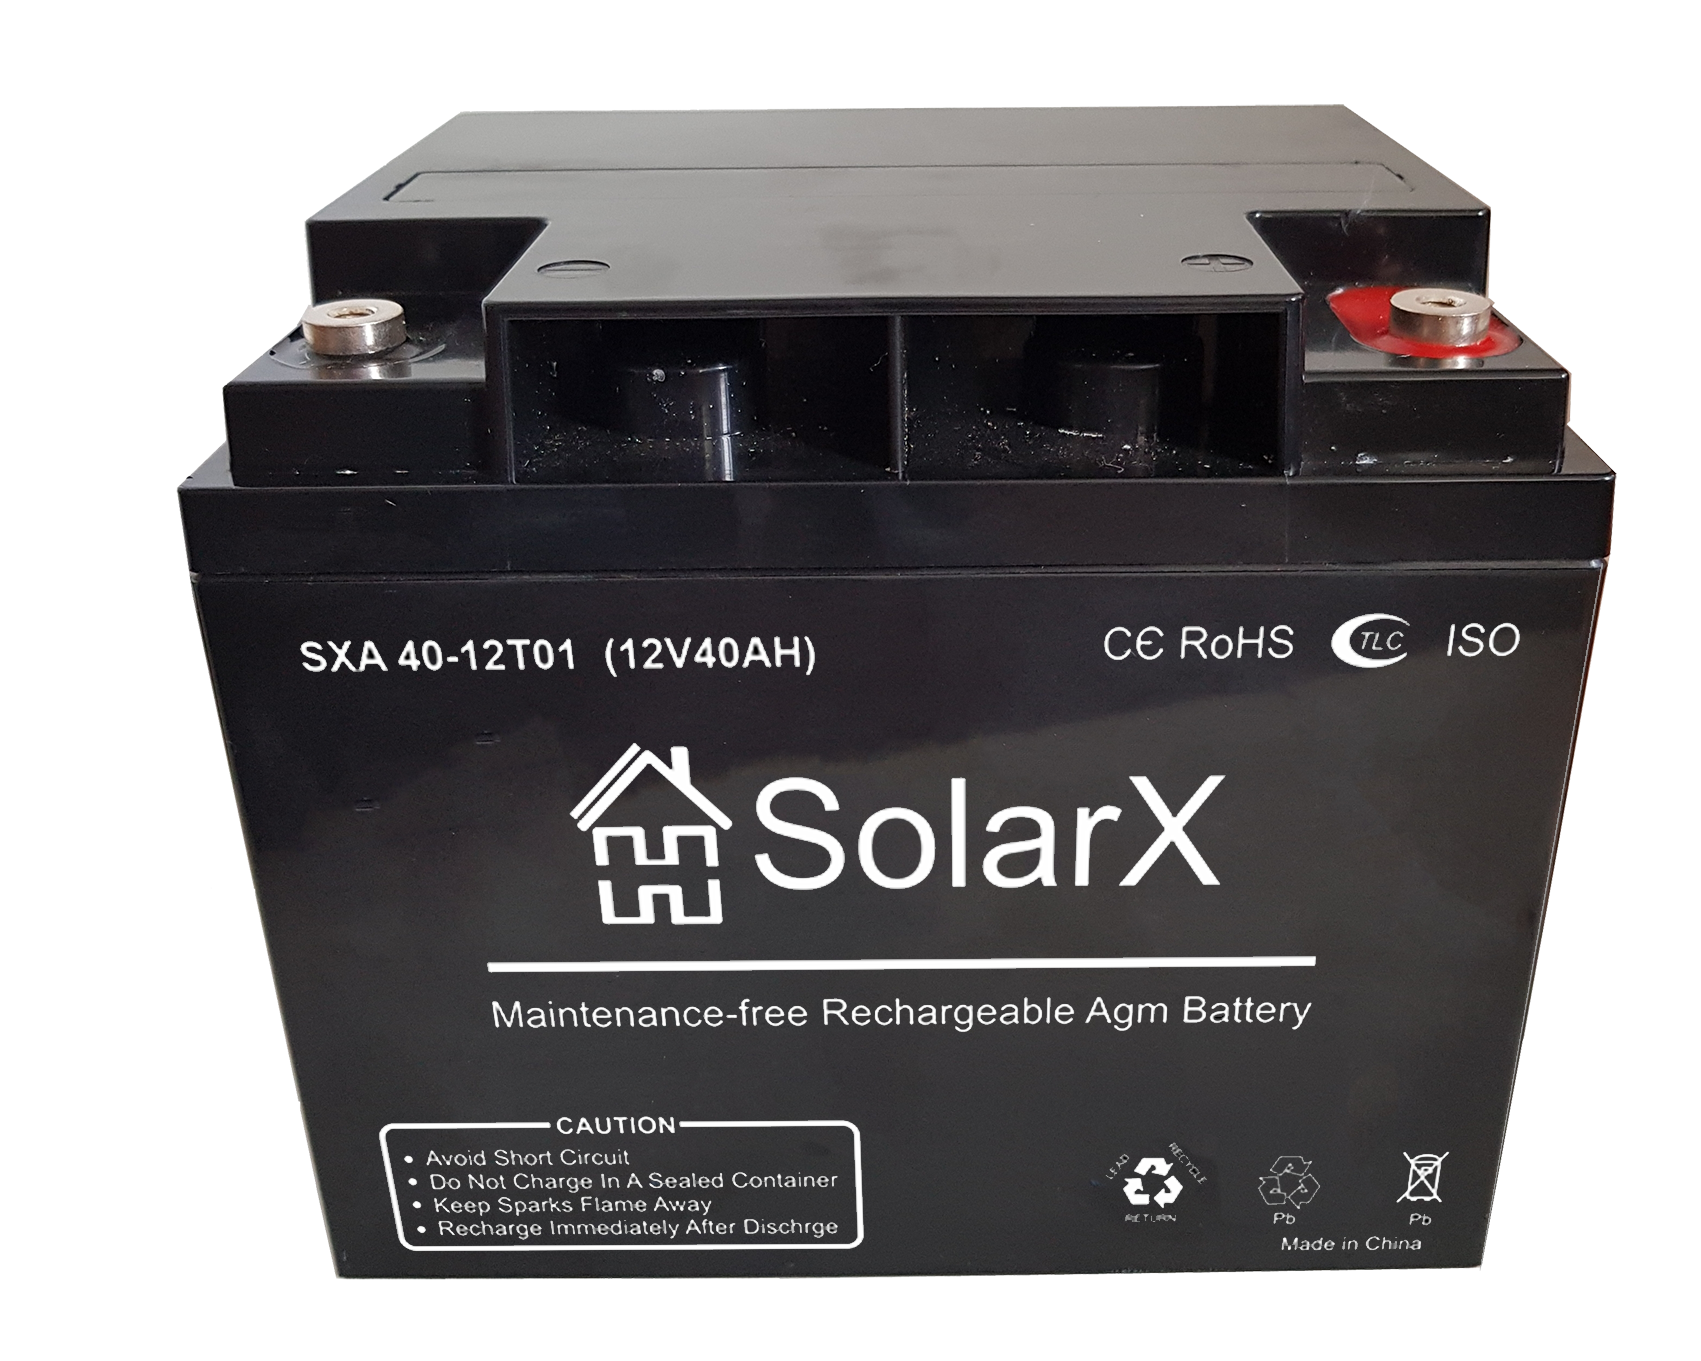 Solarx sxa 40 12t01